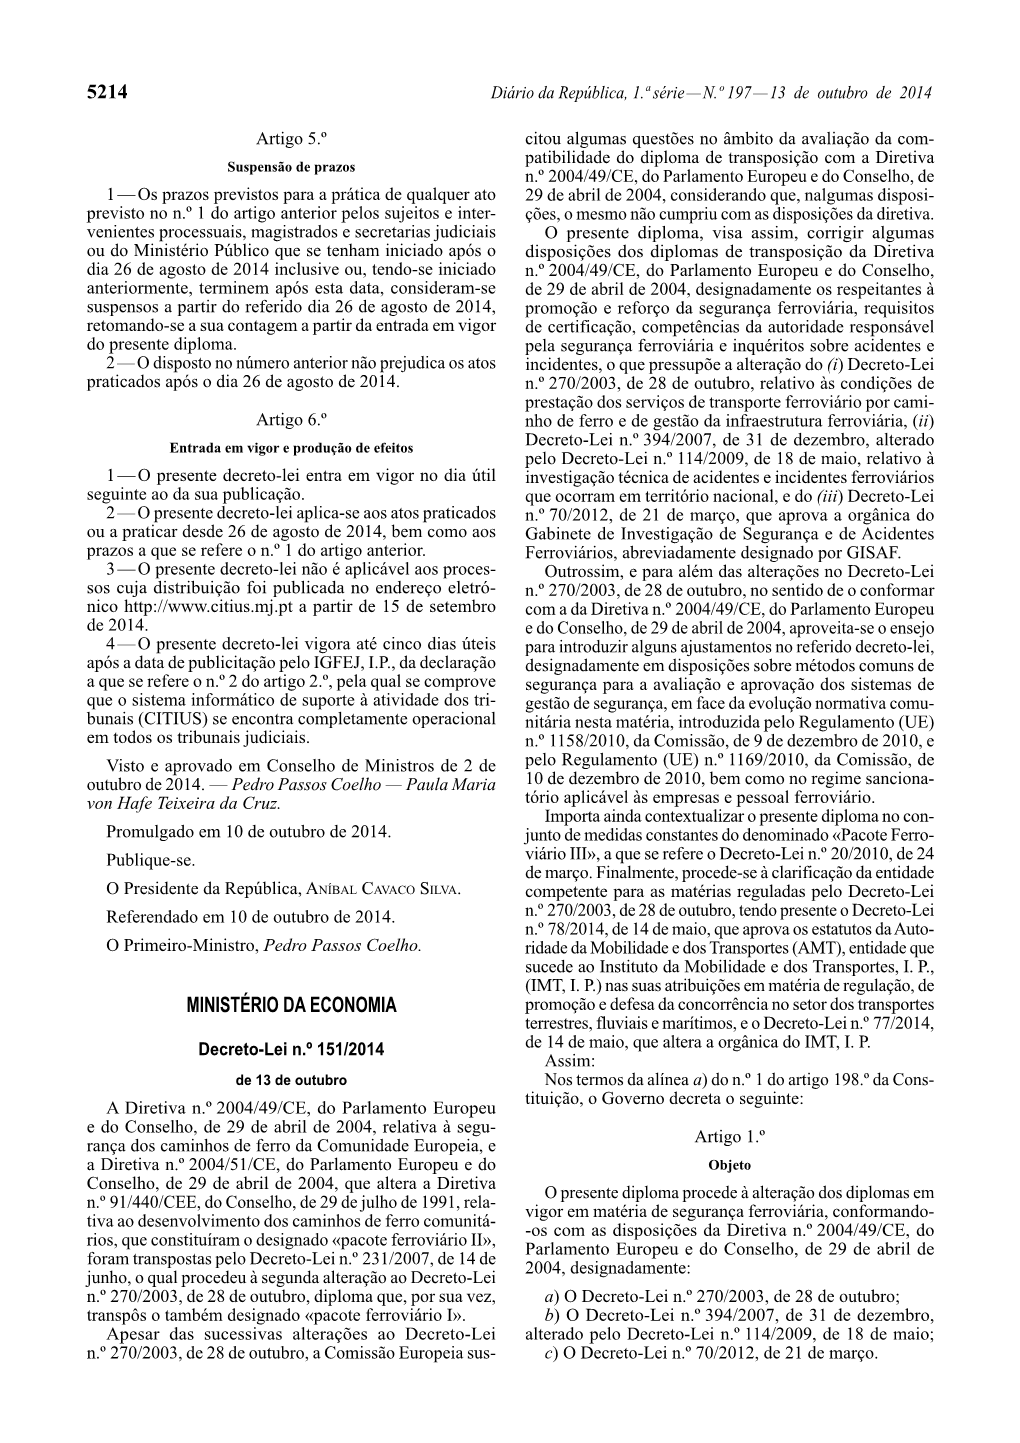 Decreto-Lei N.º 151/2014, De 13 De Outubro